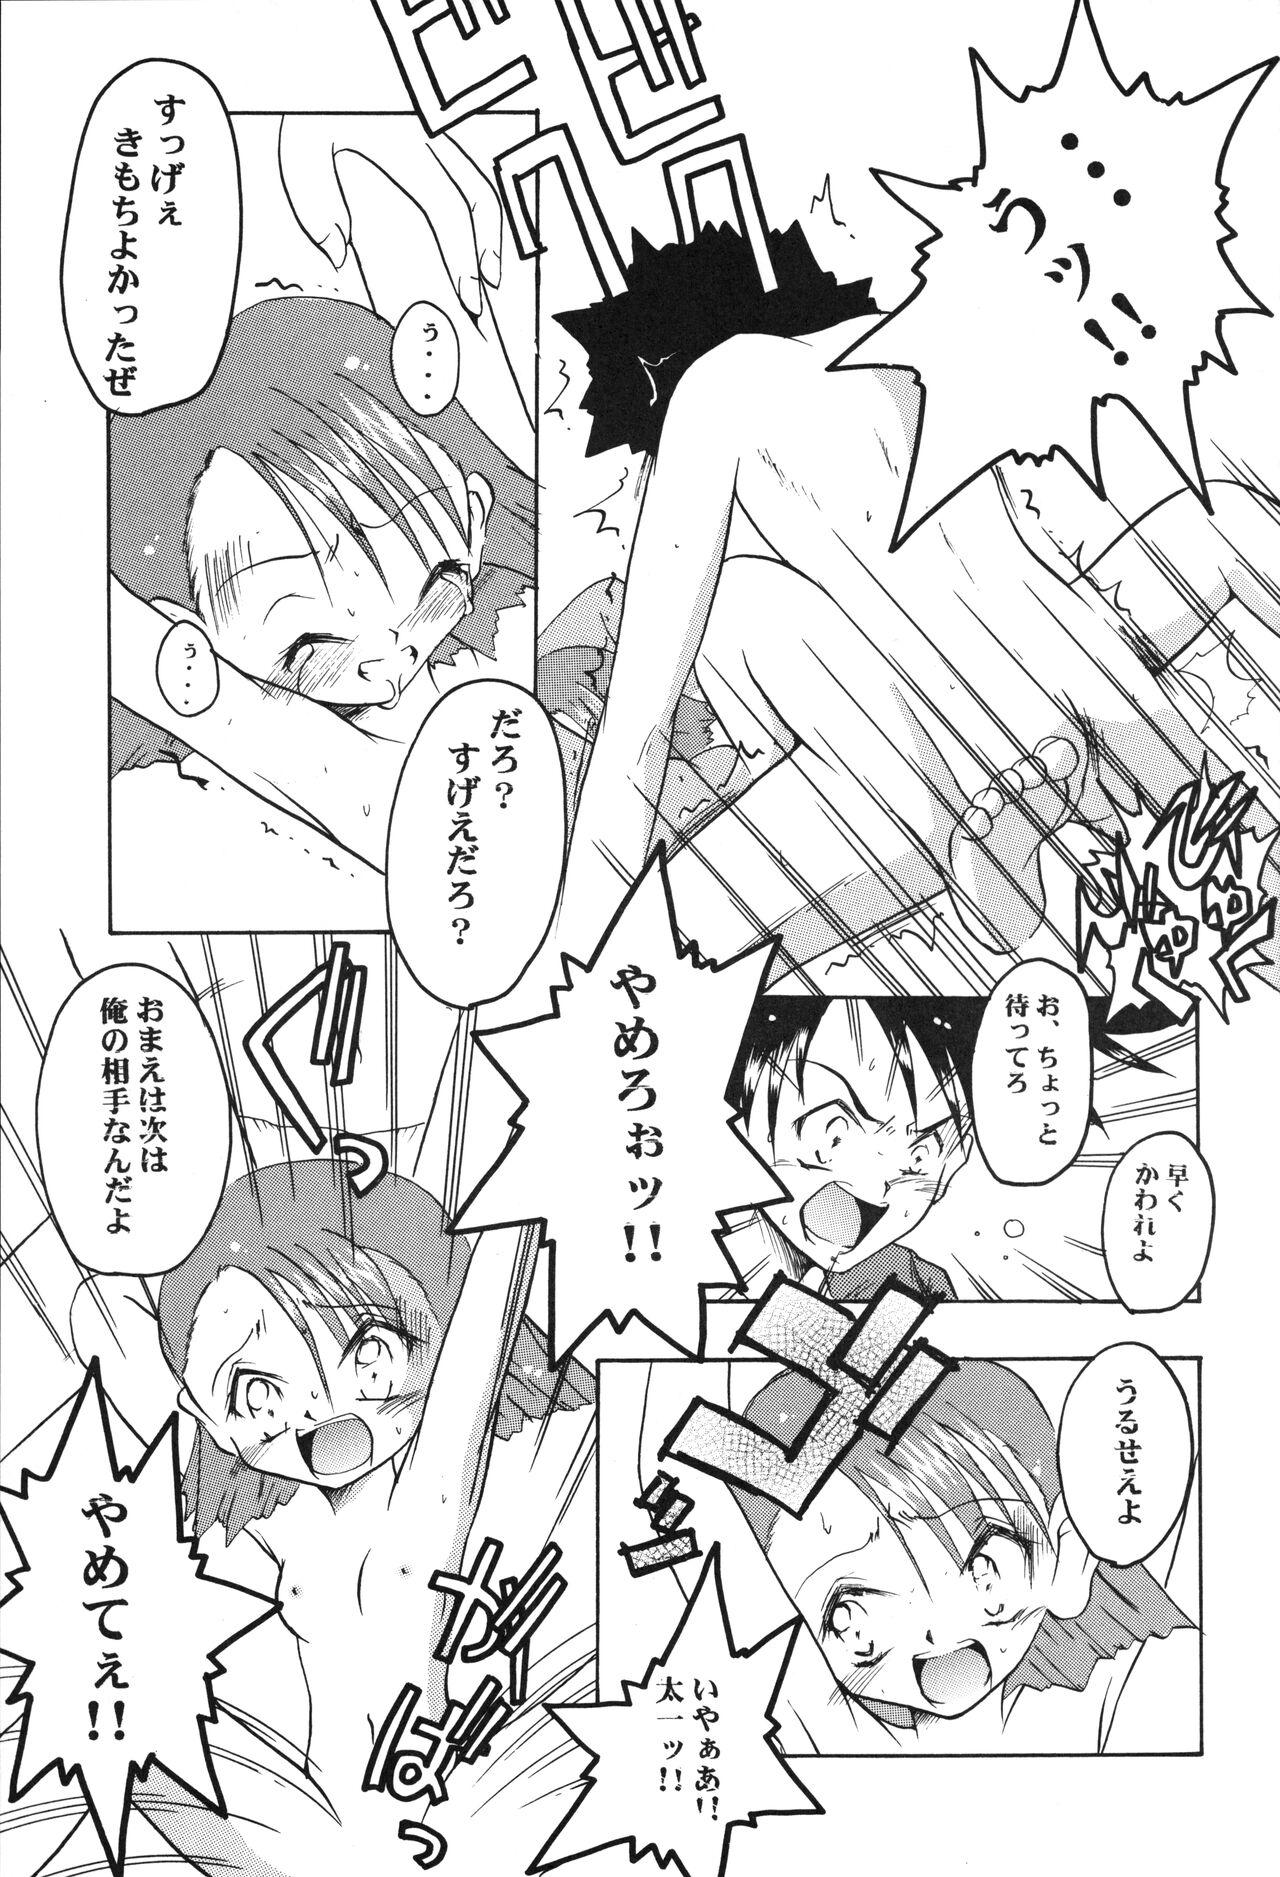 Nudity Get Sweet ”A” Low Phone ”DIGIMON ADVENTURE” - Digimon Cartoon - Page 9